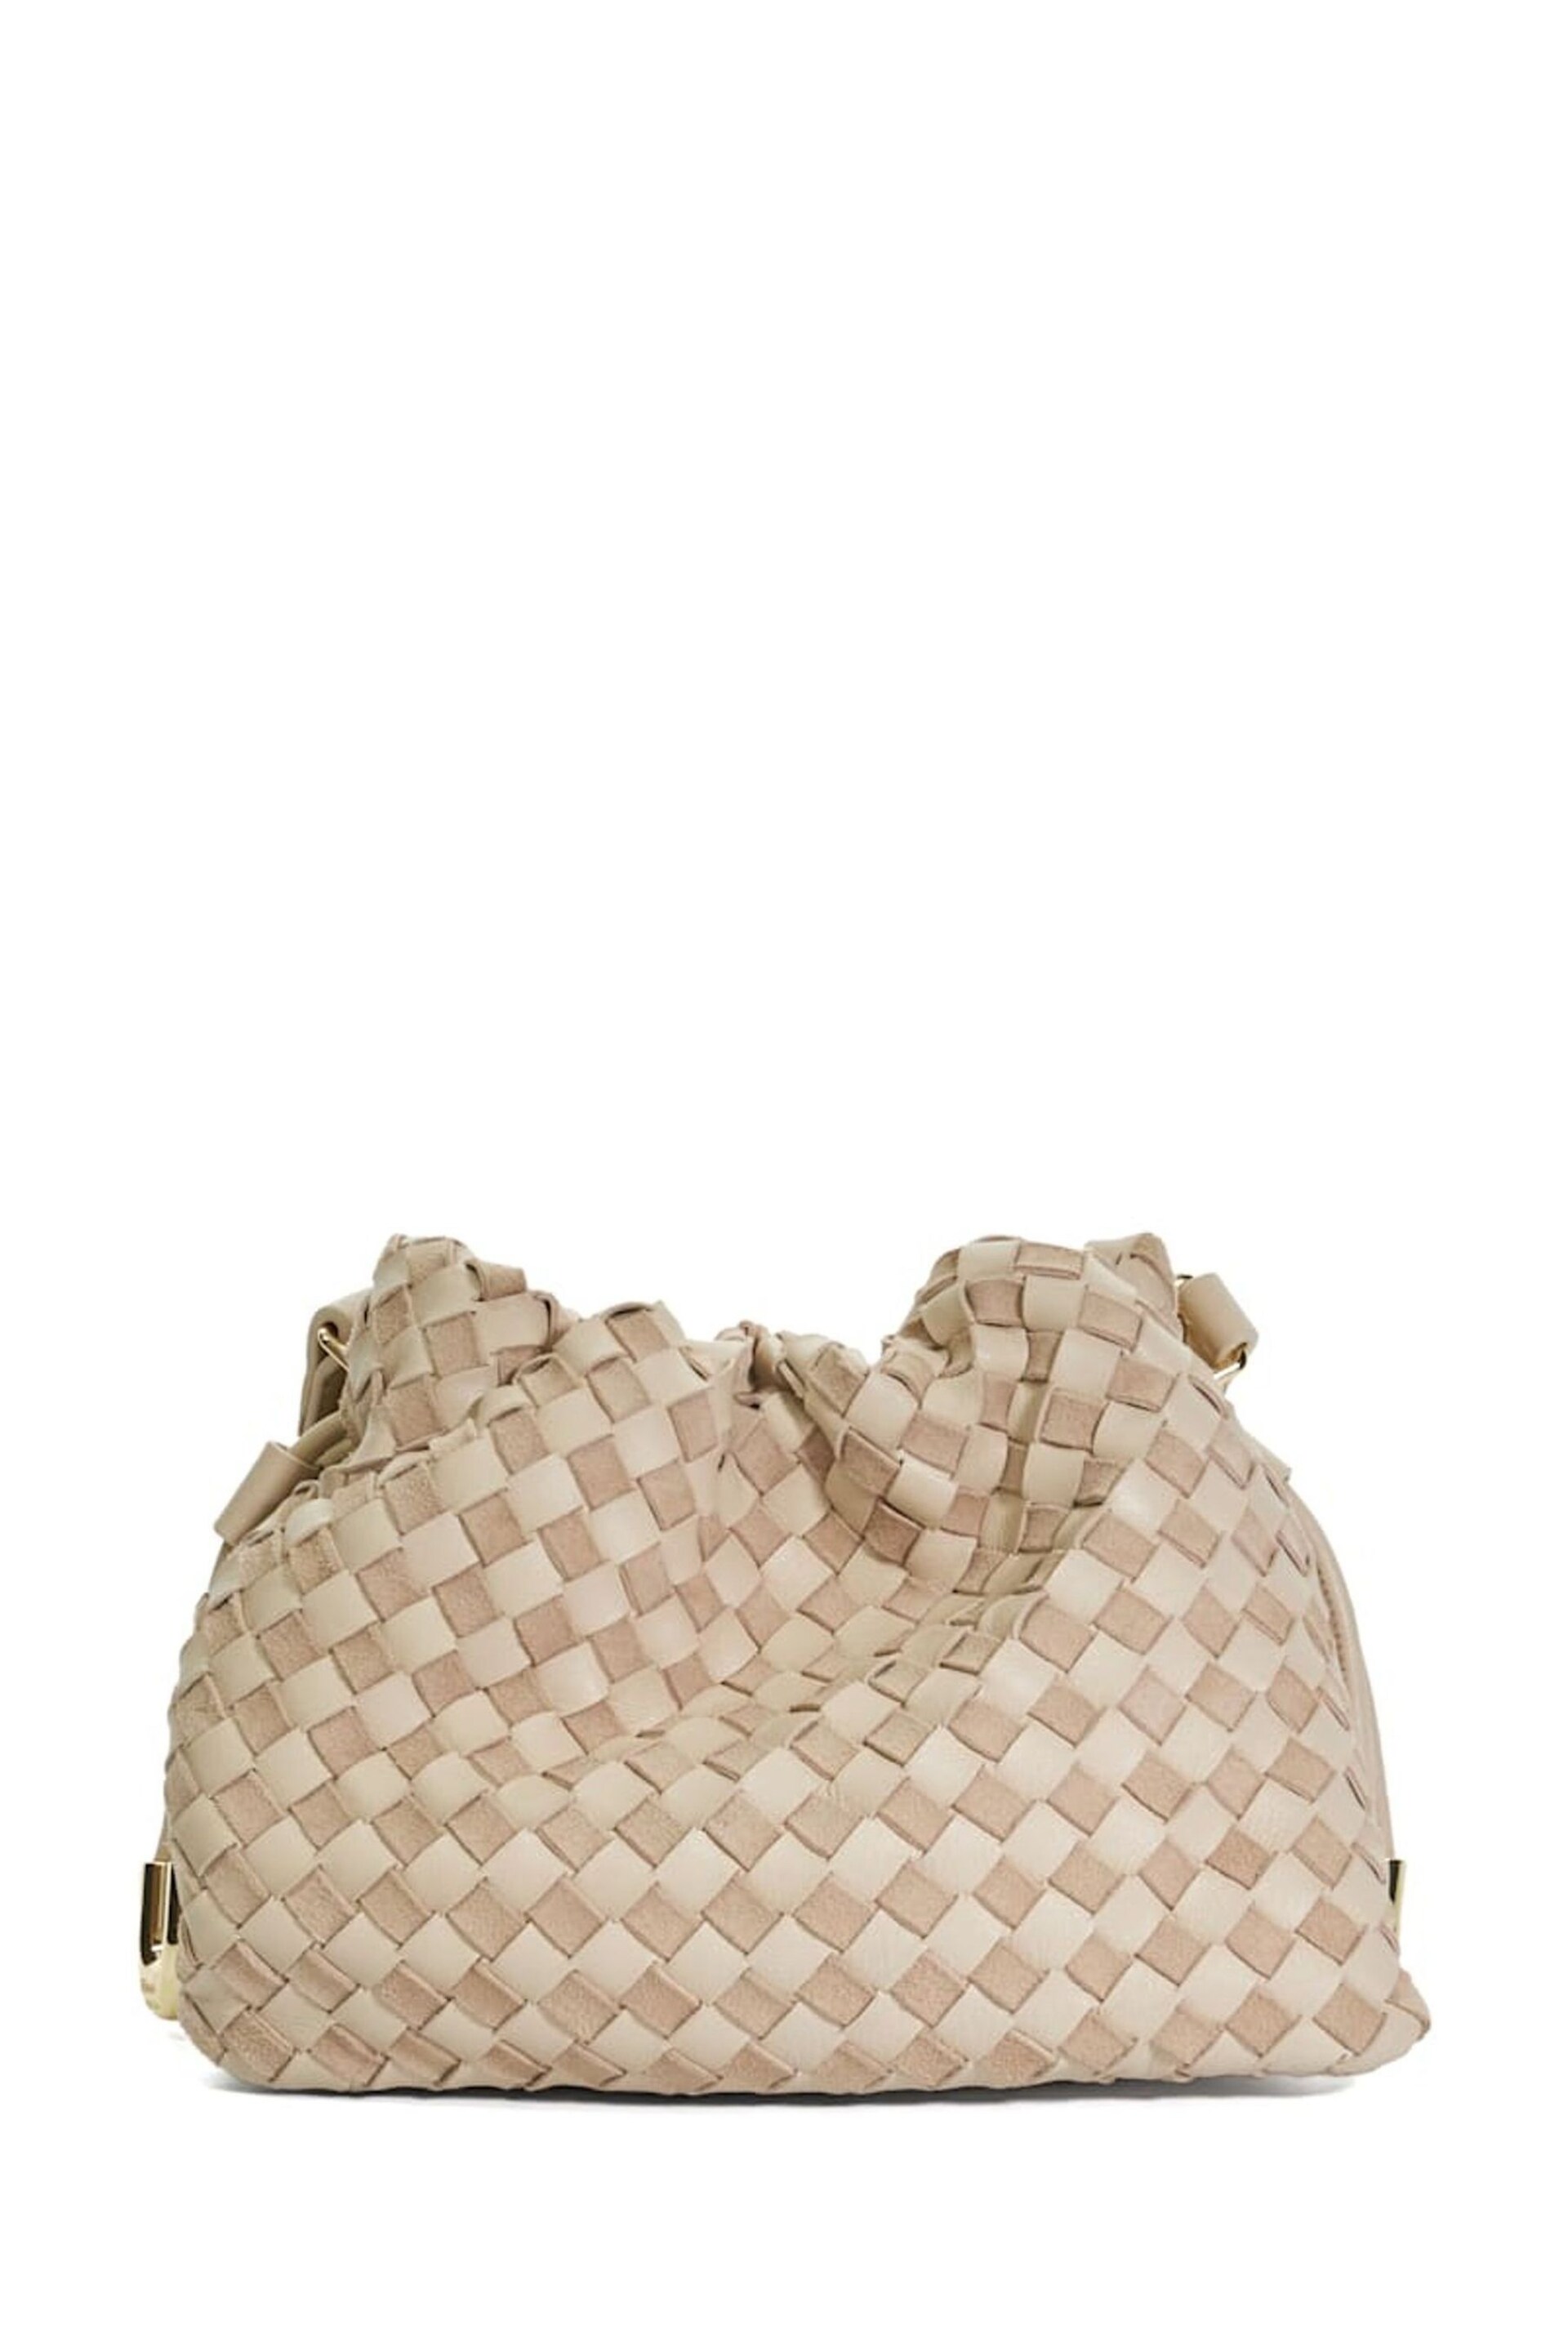 Dune London Cream Primrose Small Woven Drawstring Leather Bag - Image 3 of 5